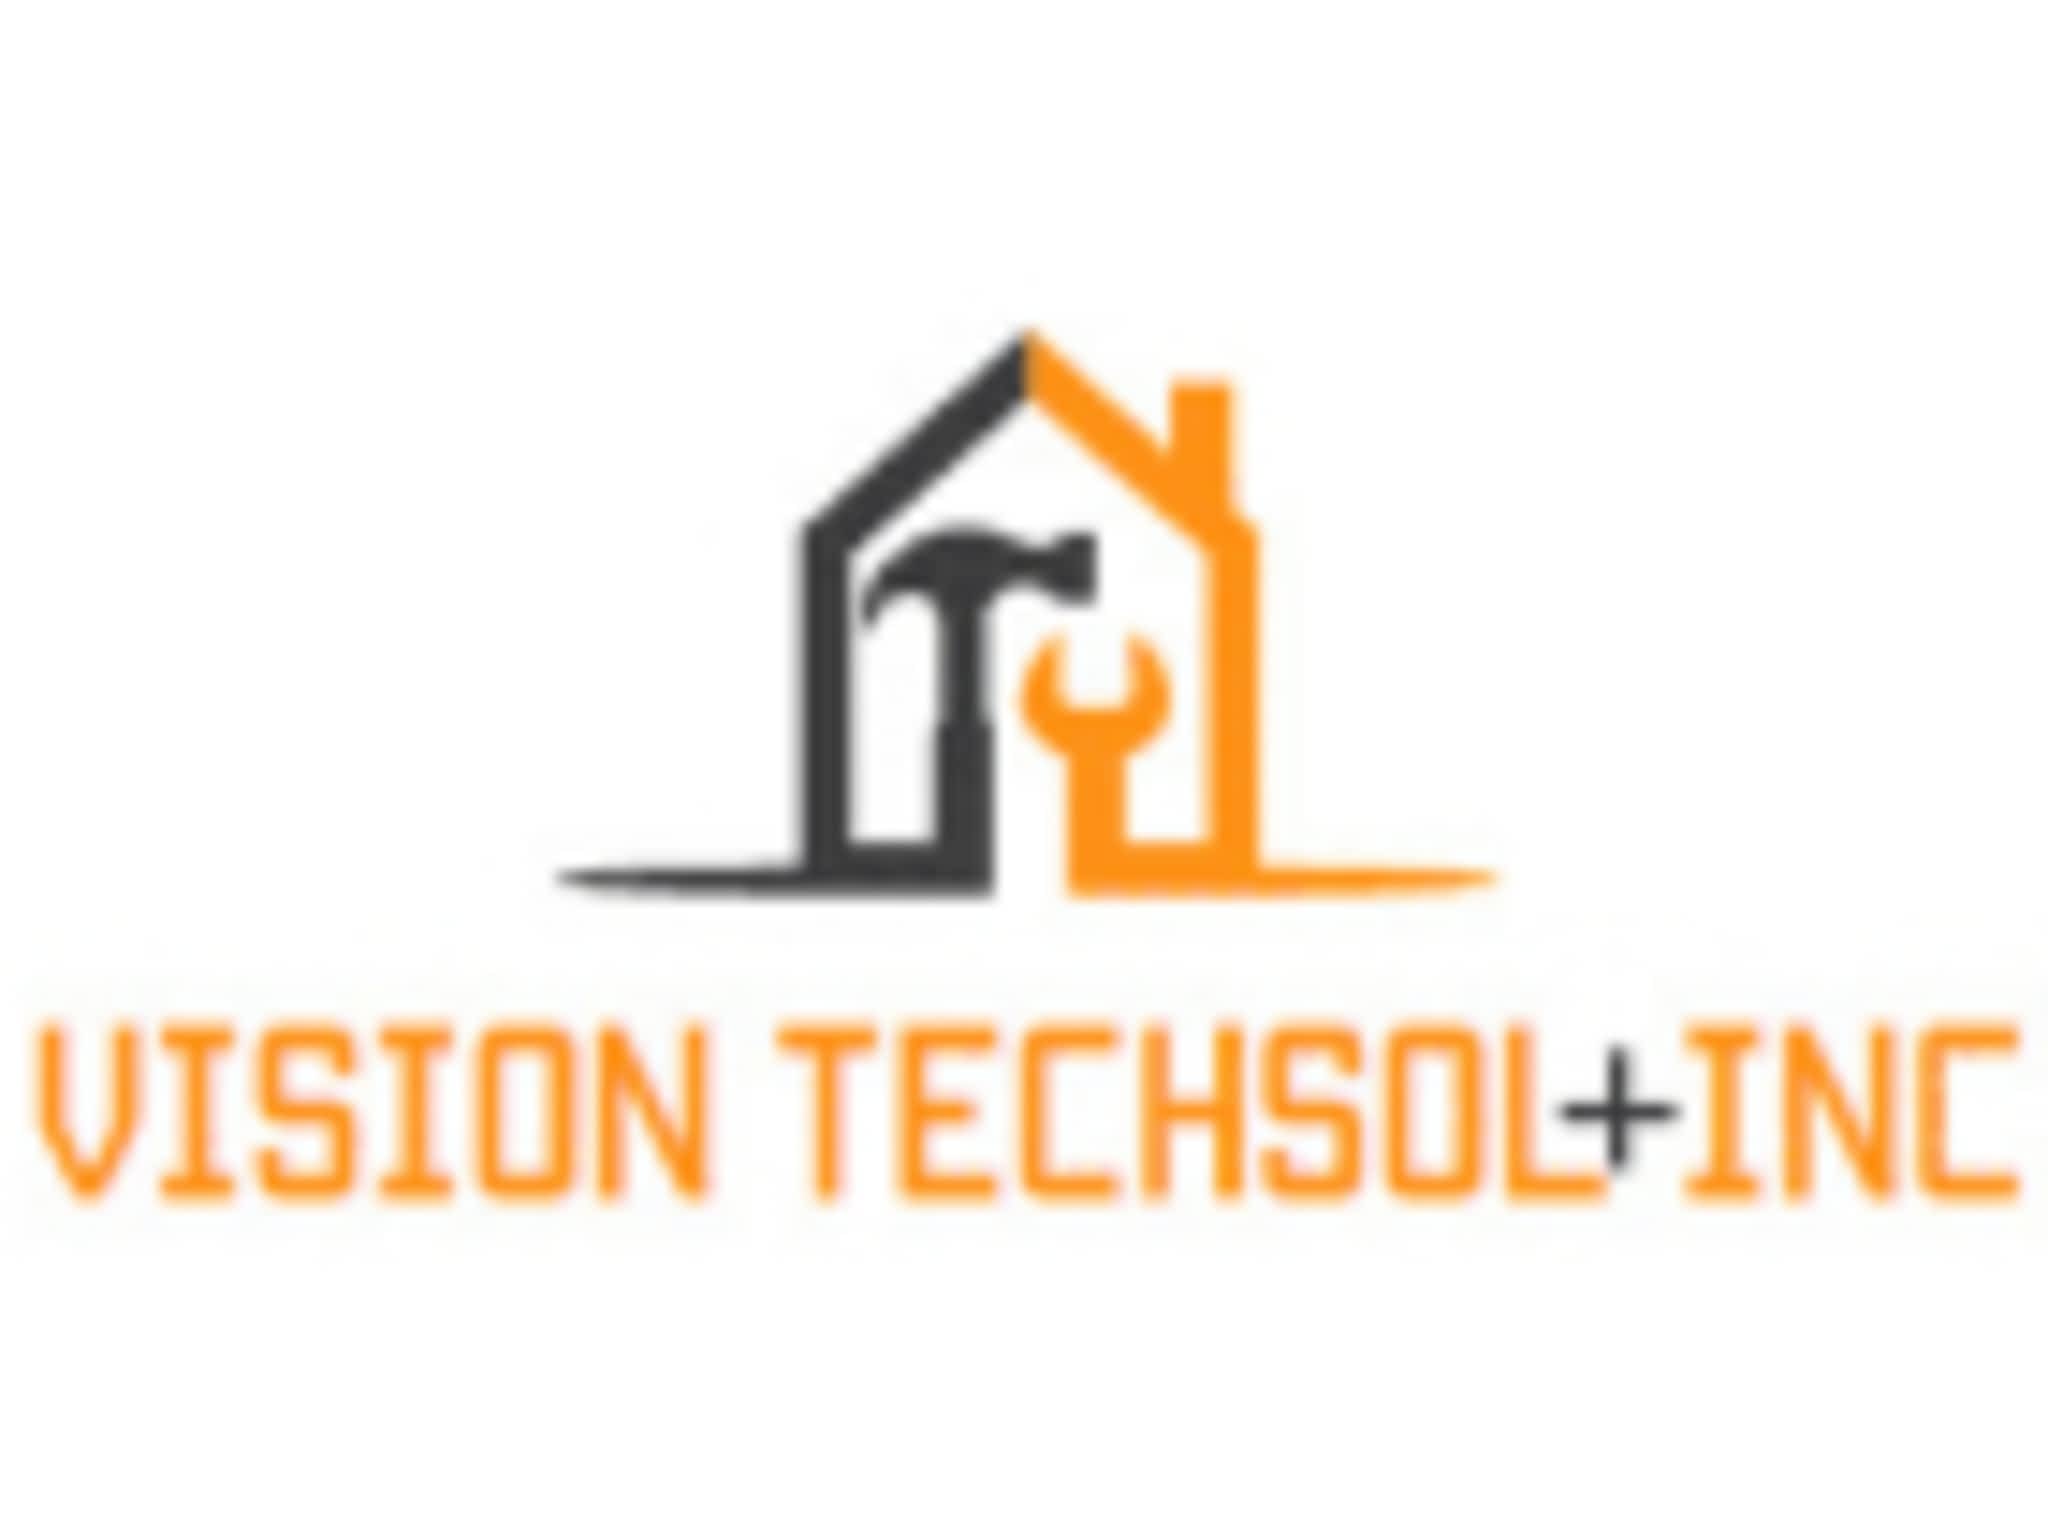 photo Vision Techsol + Inc